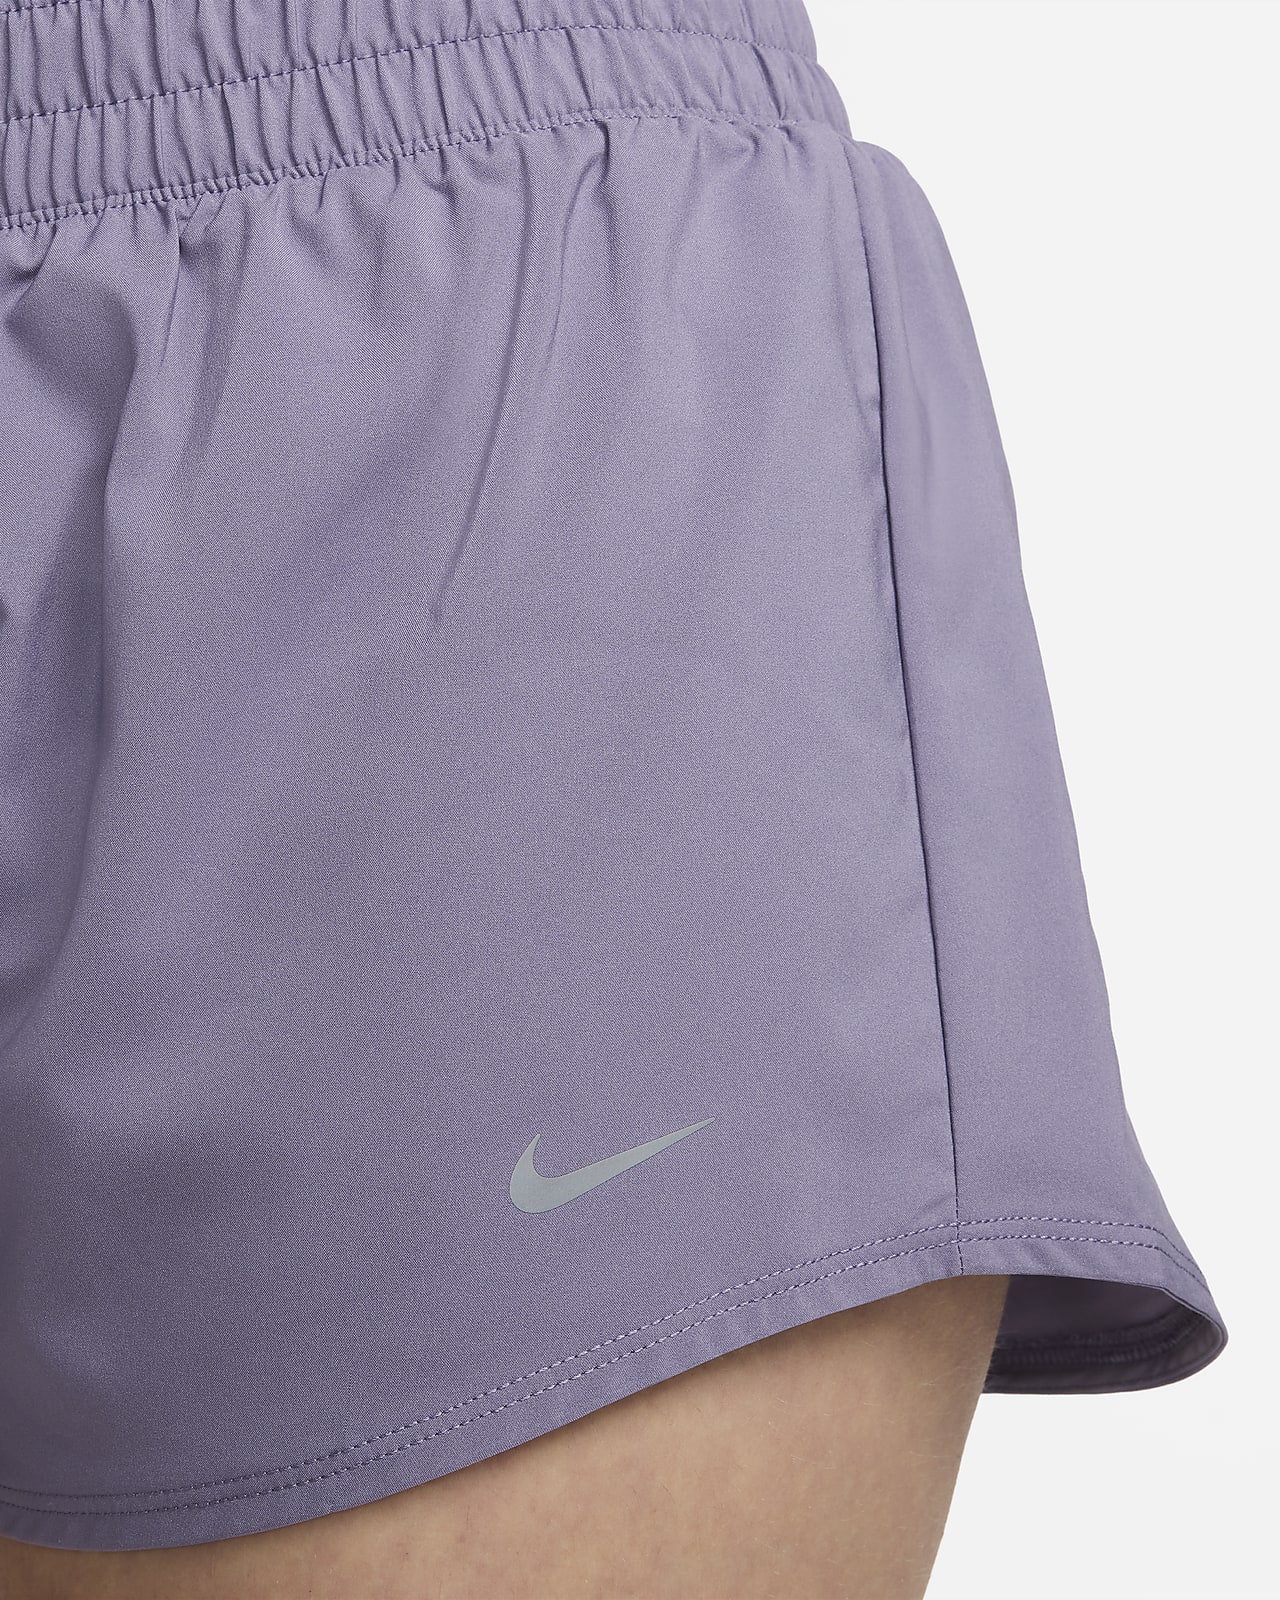 LOT OF 8 Nike DriFit Danskin BCG Womens Running Athletic Shorts Lined Size  XS